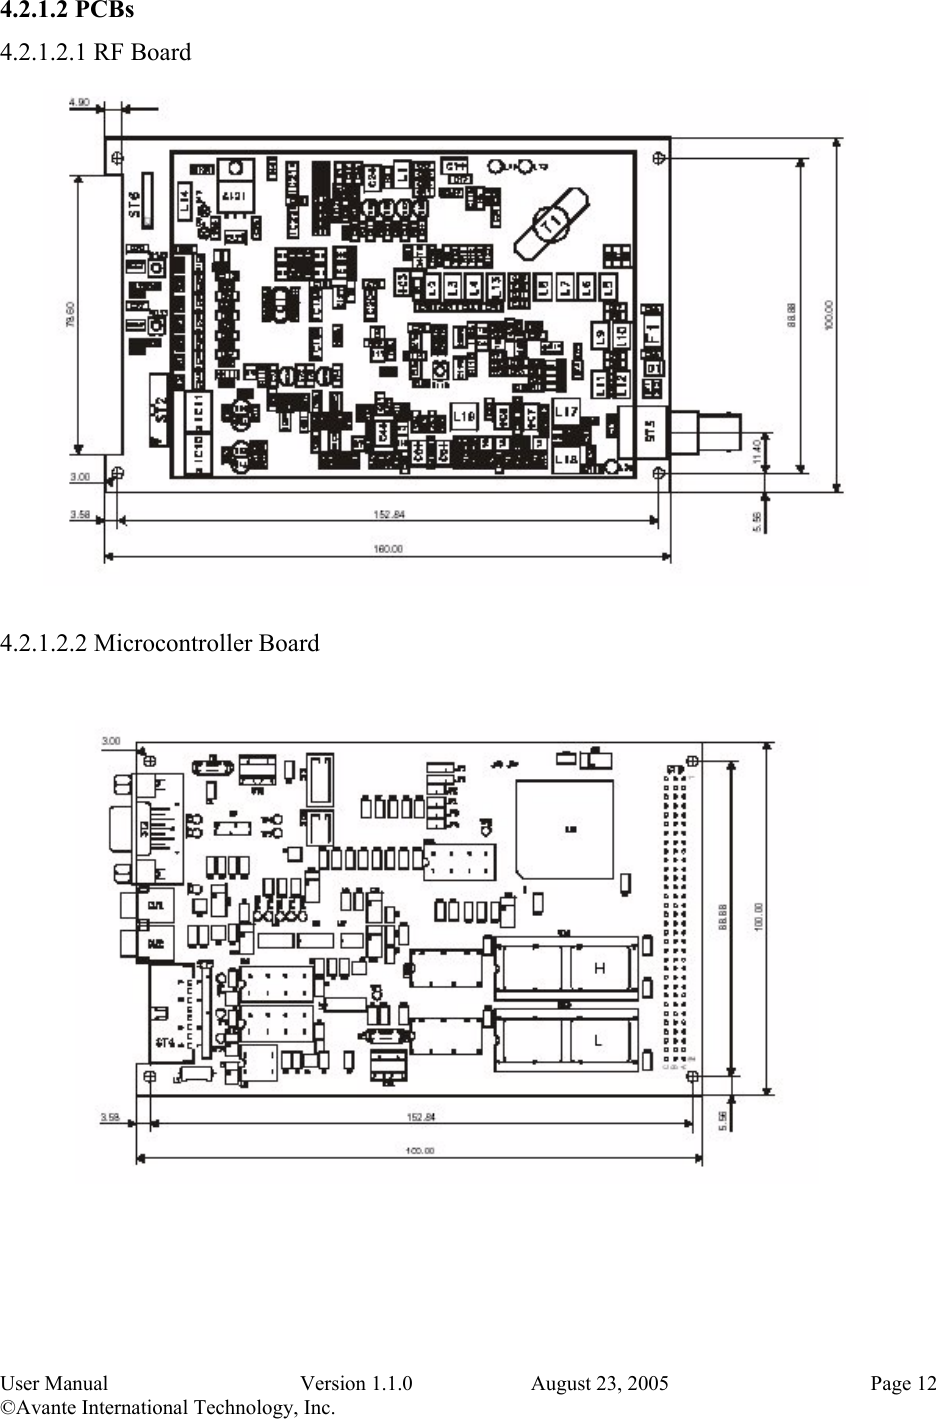 User Manual   Version 1.1.0   August 23, 2005    Page 12 ©Avante International Technology, Inc.   4.2.1.2 PCBs 4.2.1.2.1 RF Board  4.2.1.2.2 Microcontroller Board   